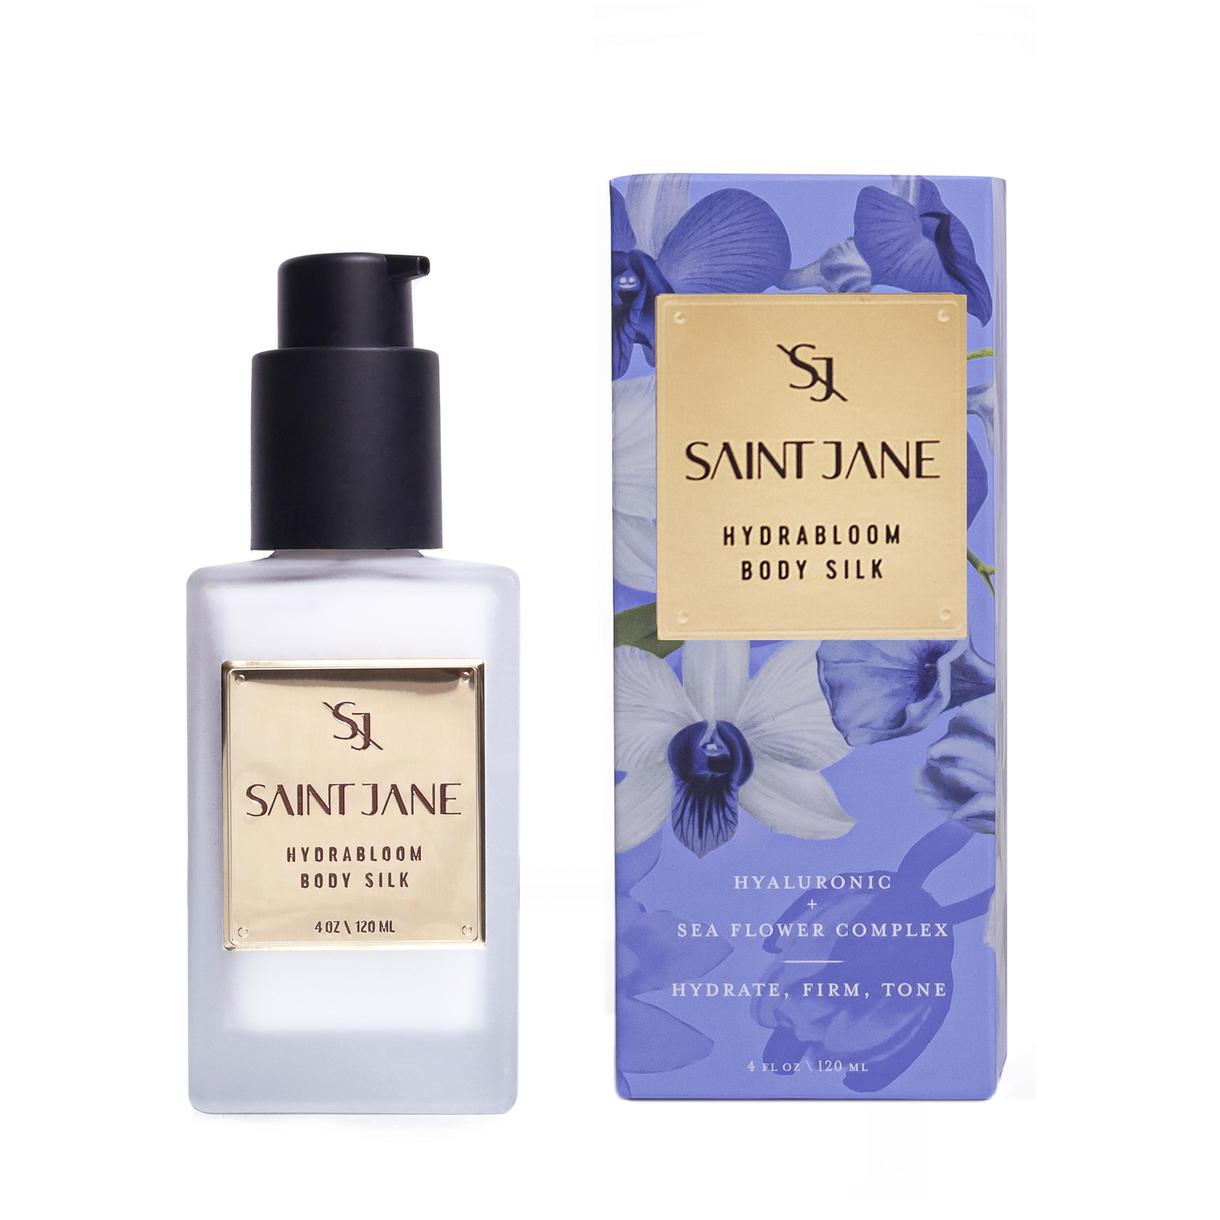 Saint Jane Hydrabloom Body Silk